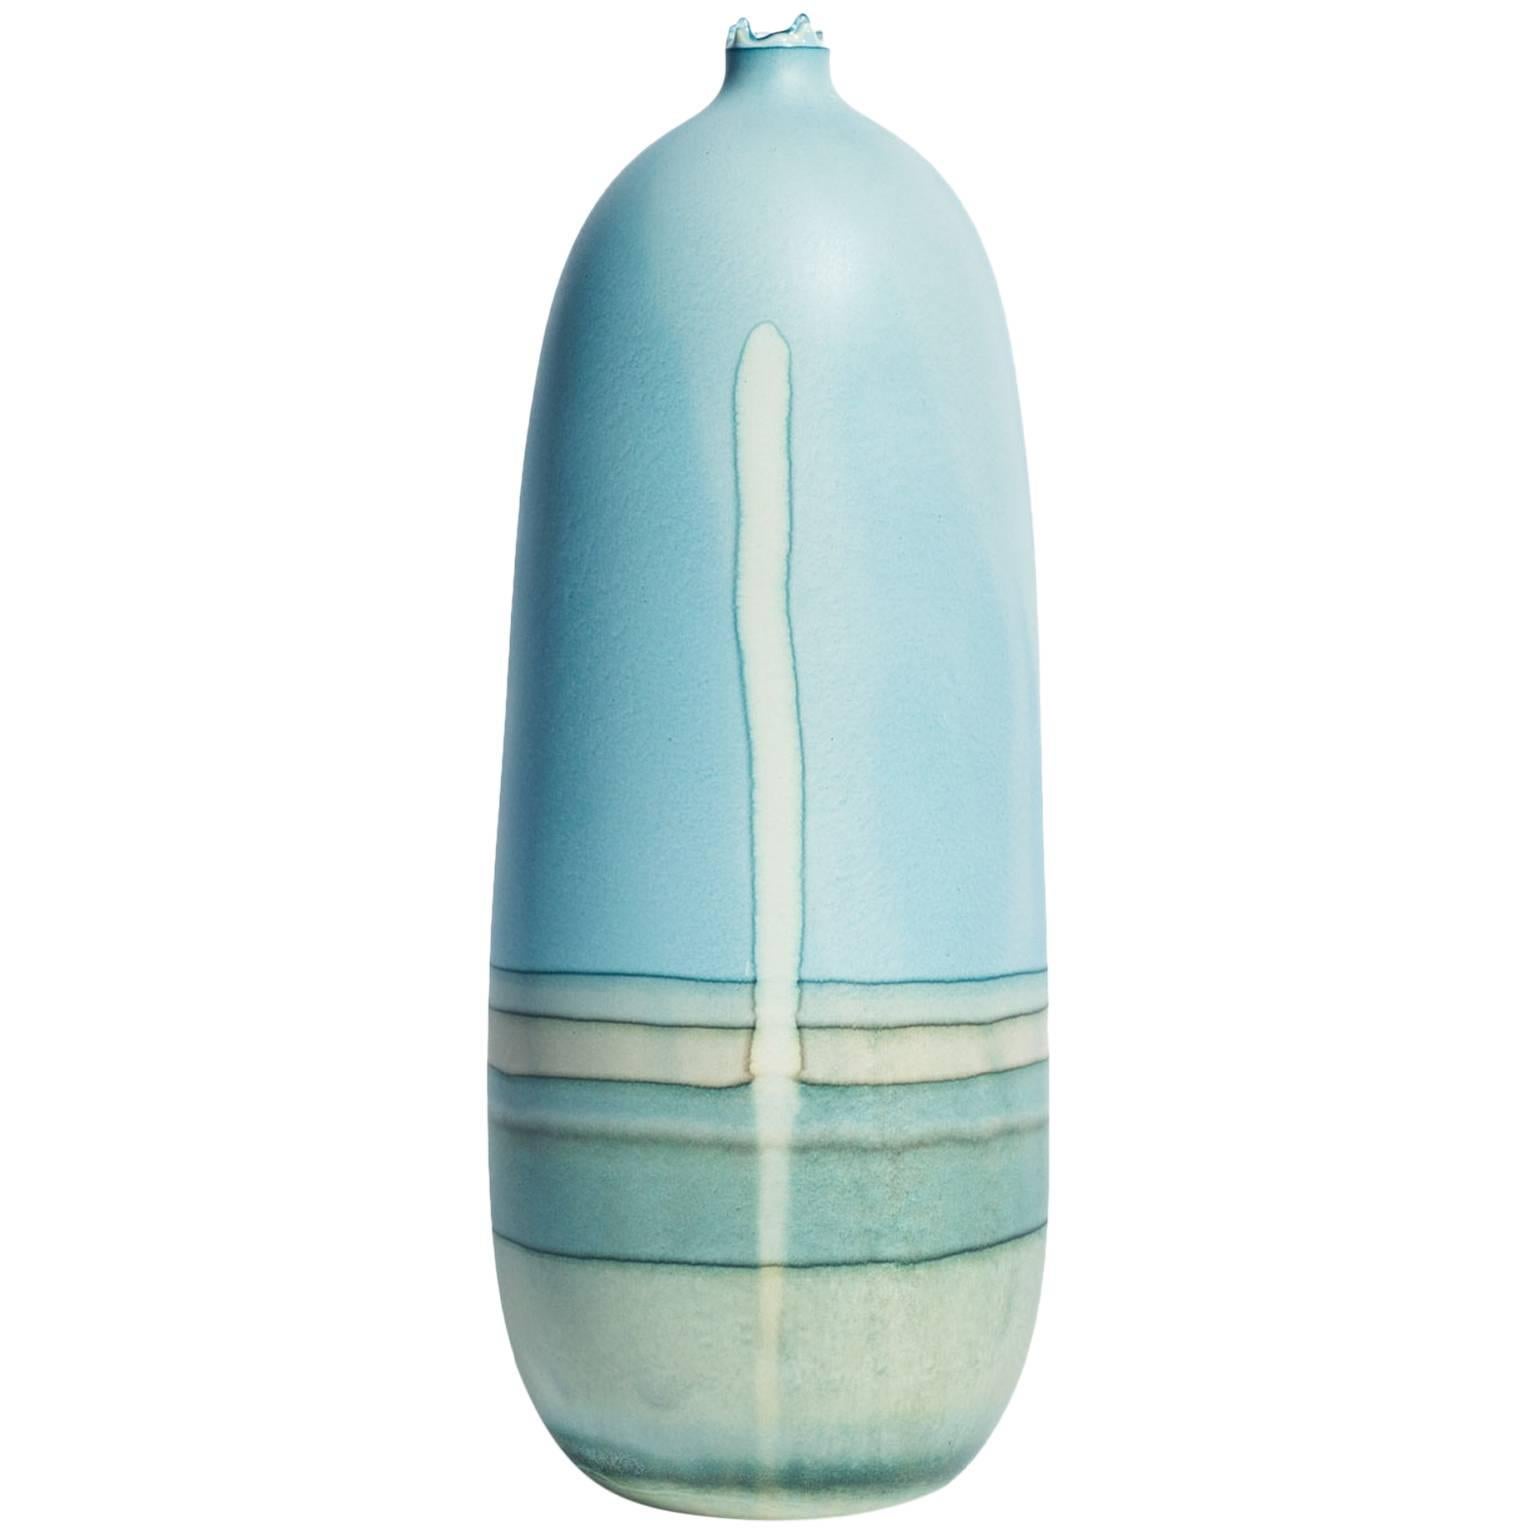 Unique Tall Oblong Landscape Vase in Blue and Aqua